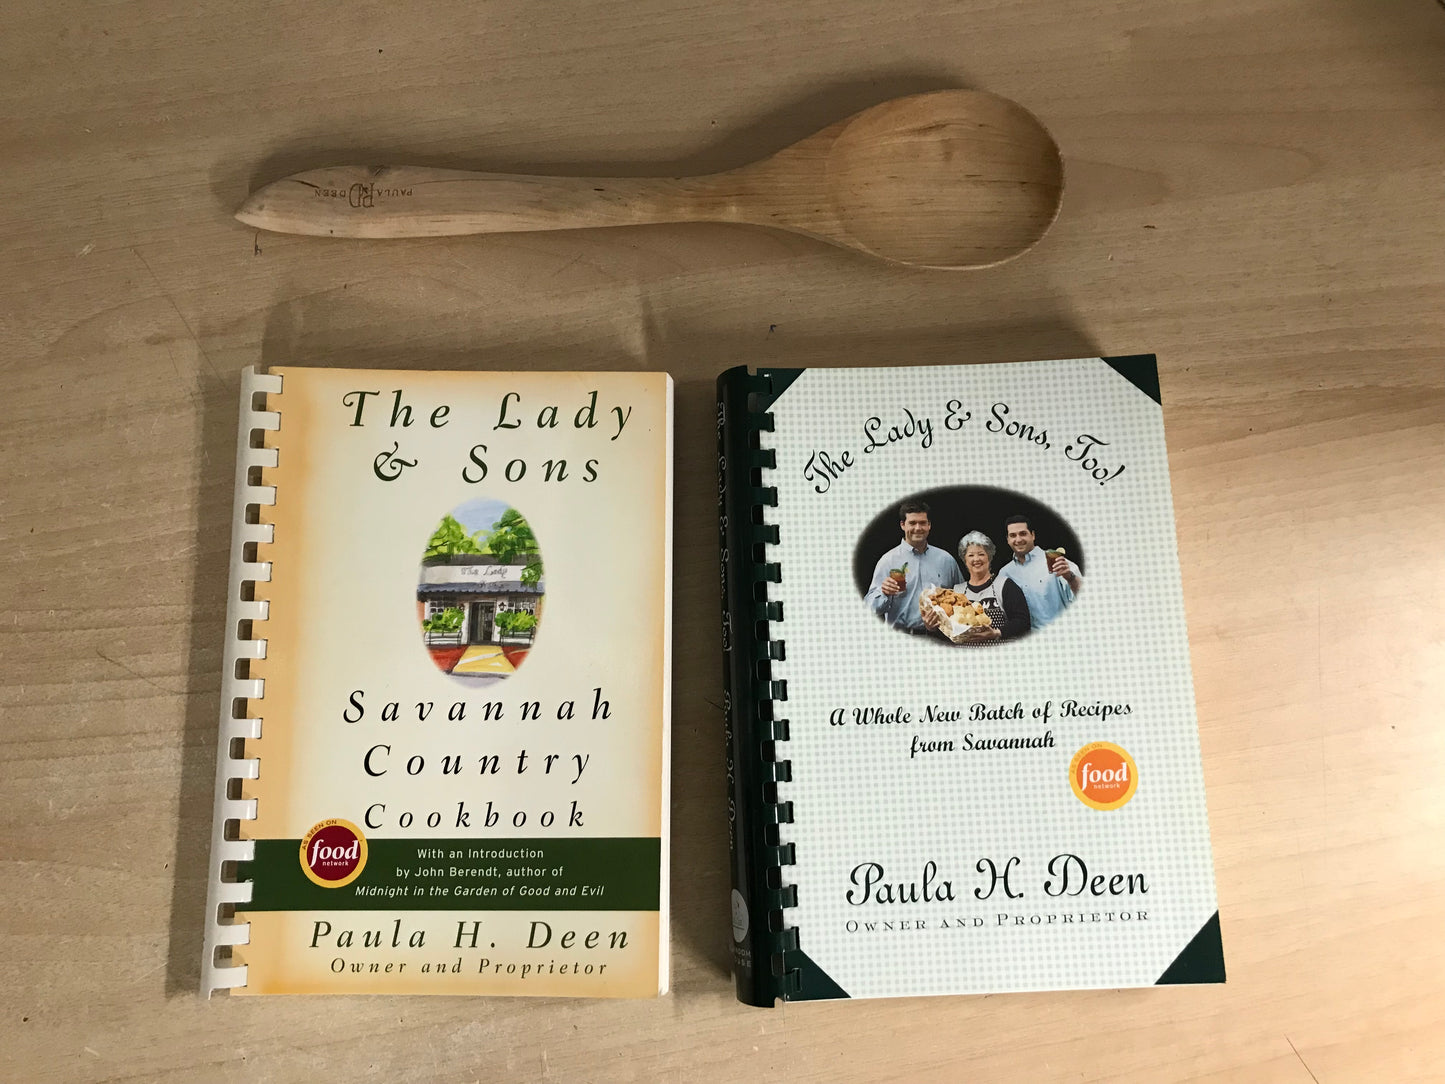 Paula Deen Food Network Cookbooks and Signature Wooden Spoon Set